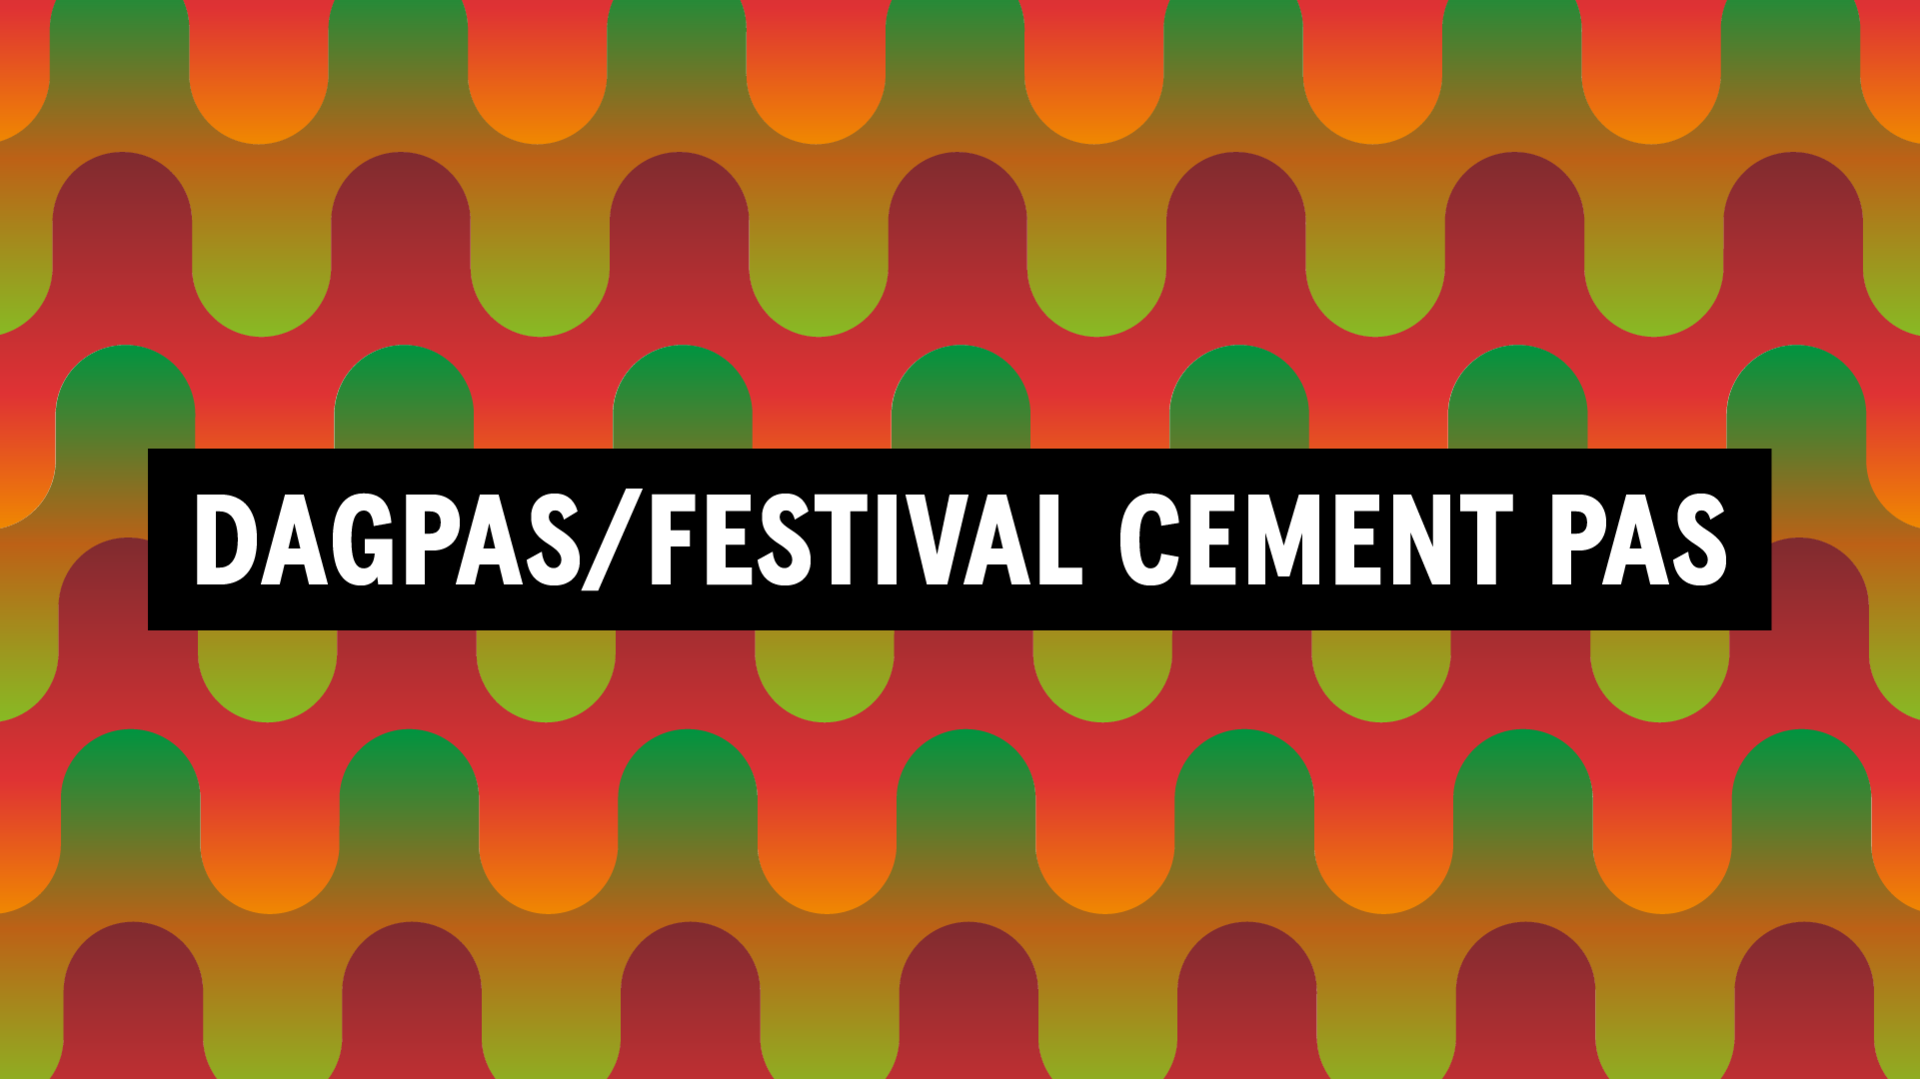 Festival Cement passen